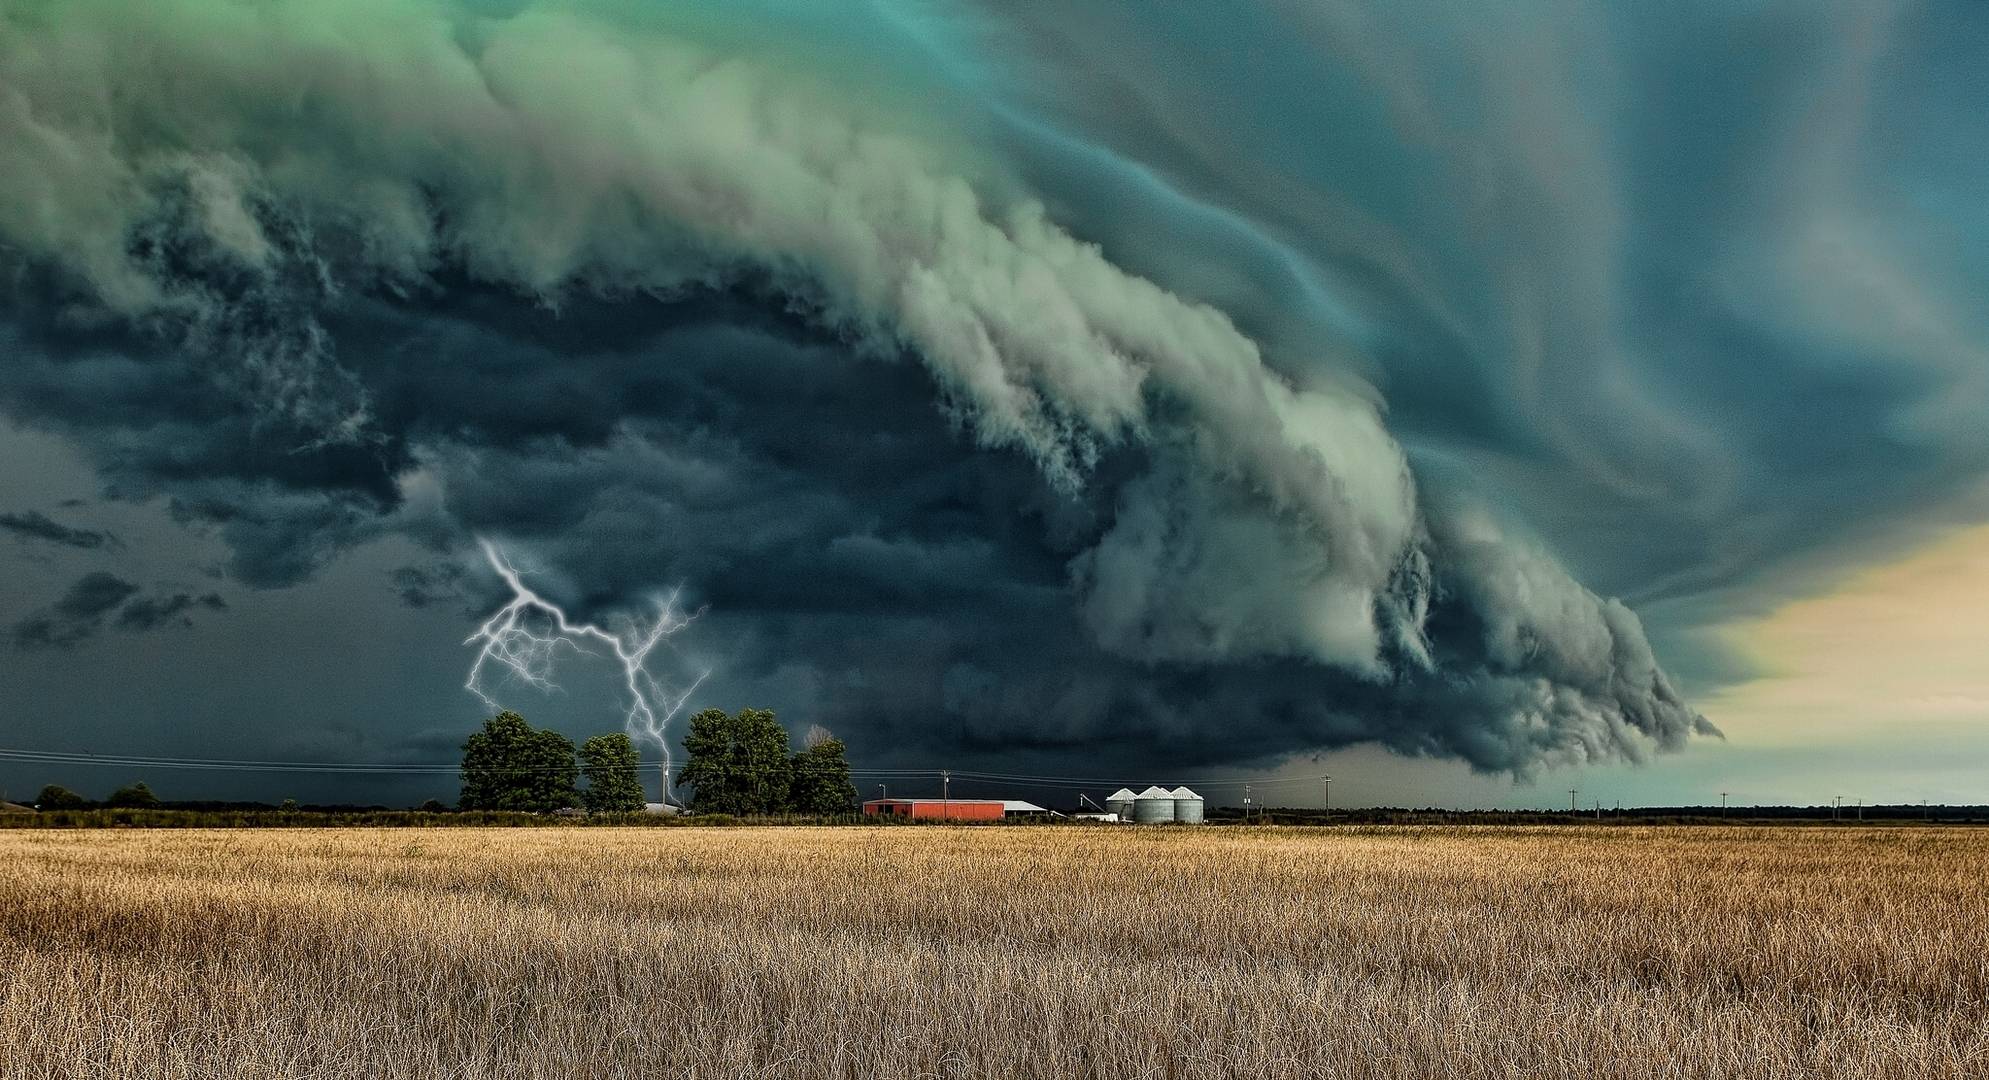 Landscape, lighting, storm cloud, July wallpaper and image